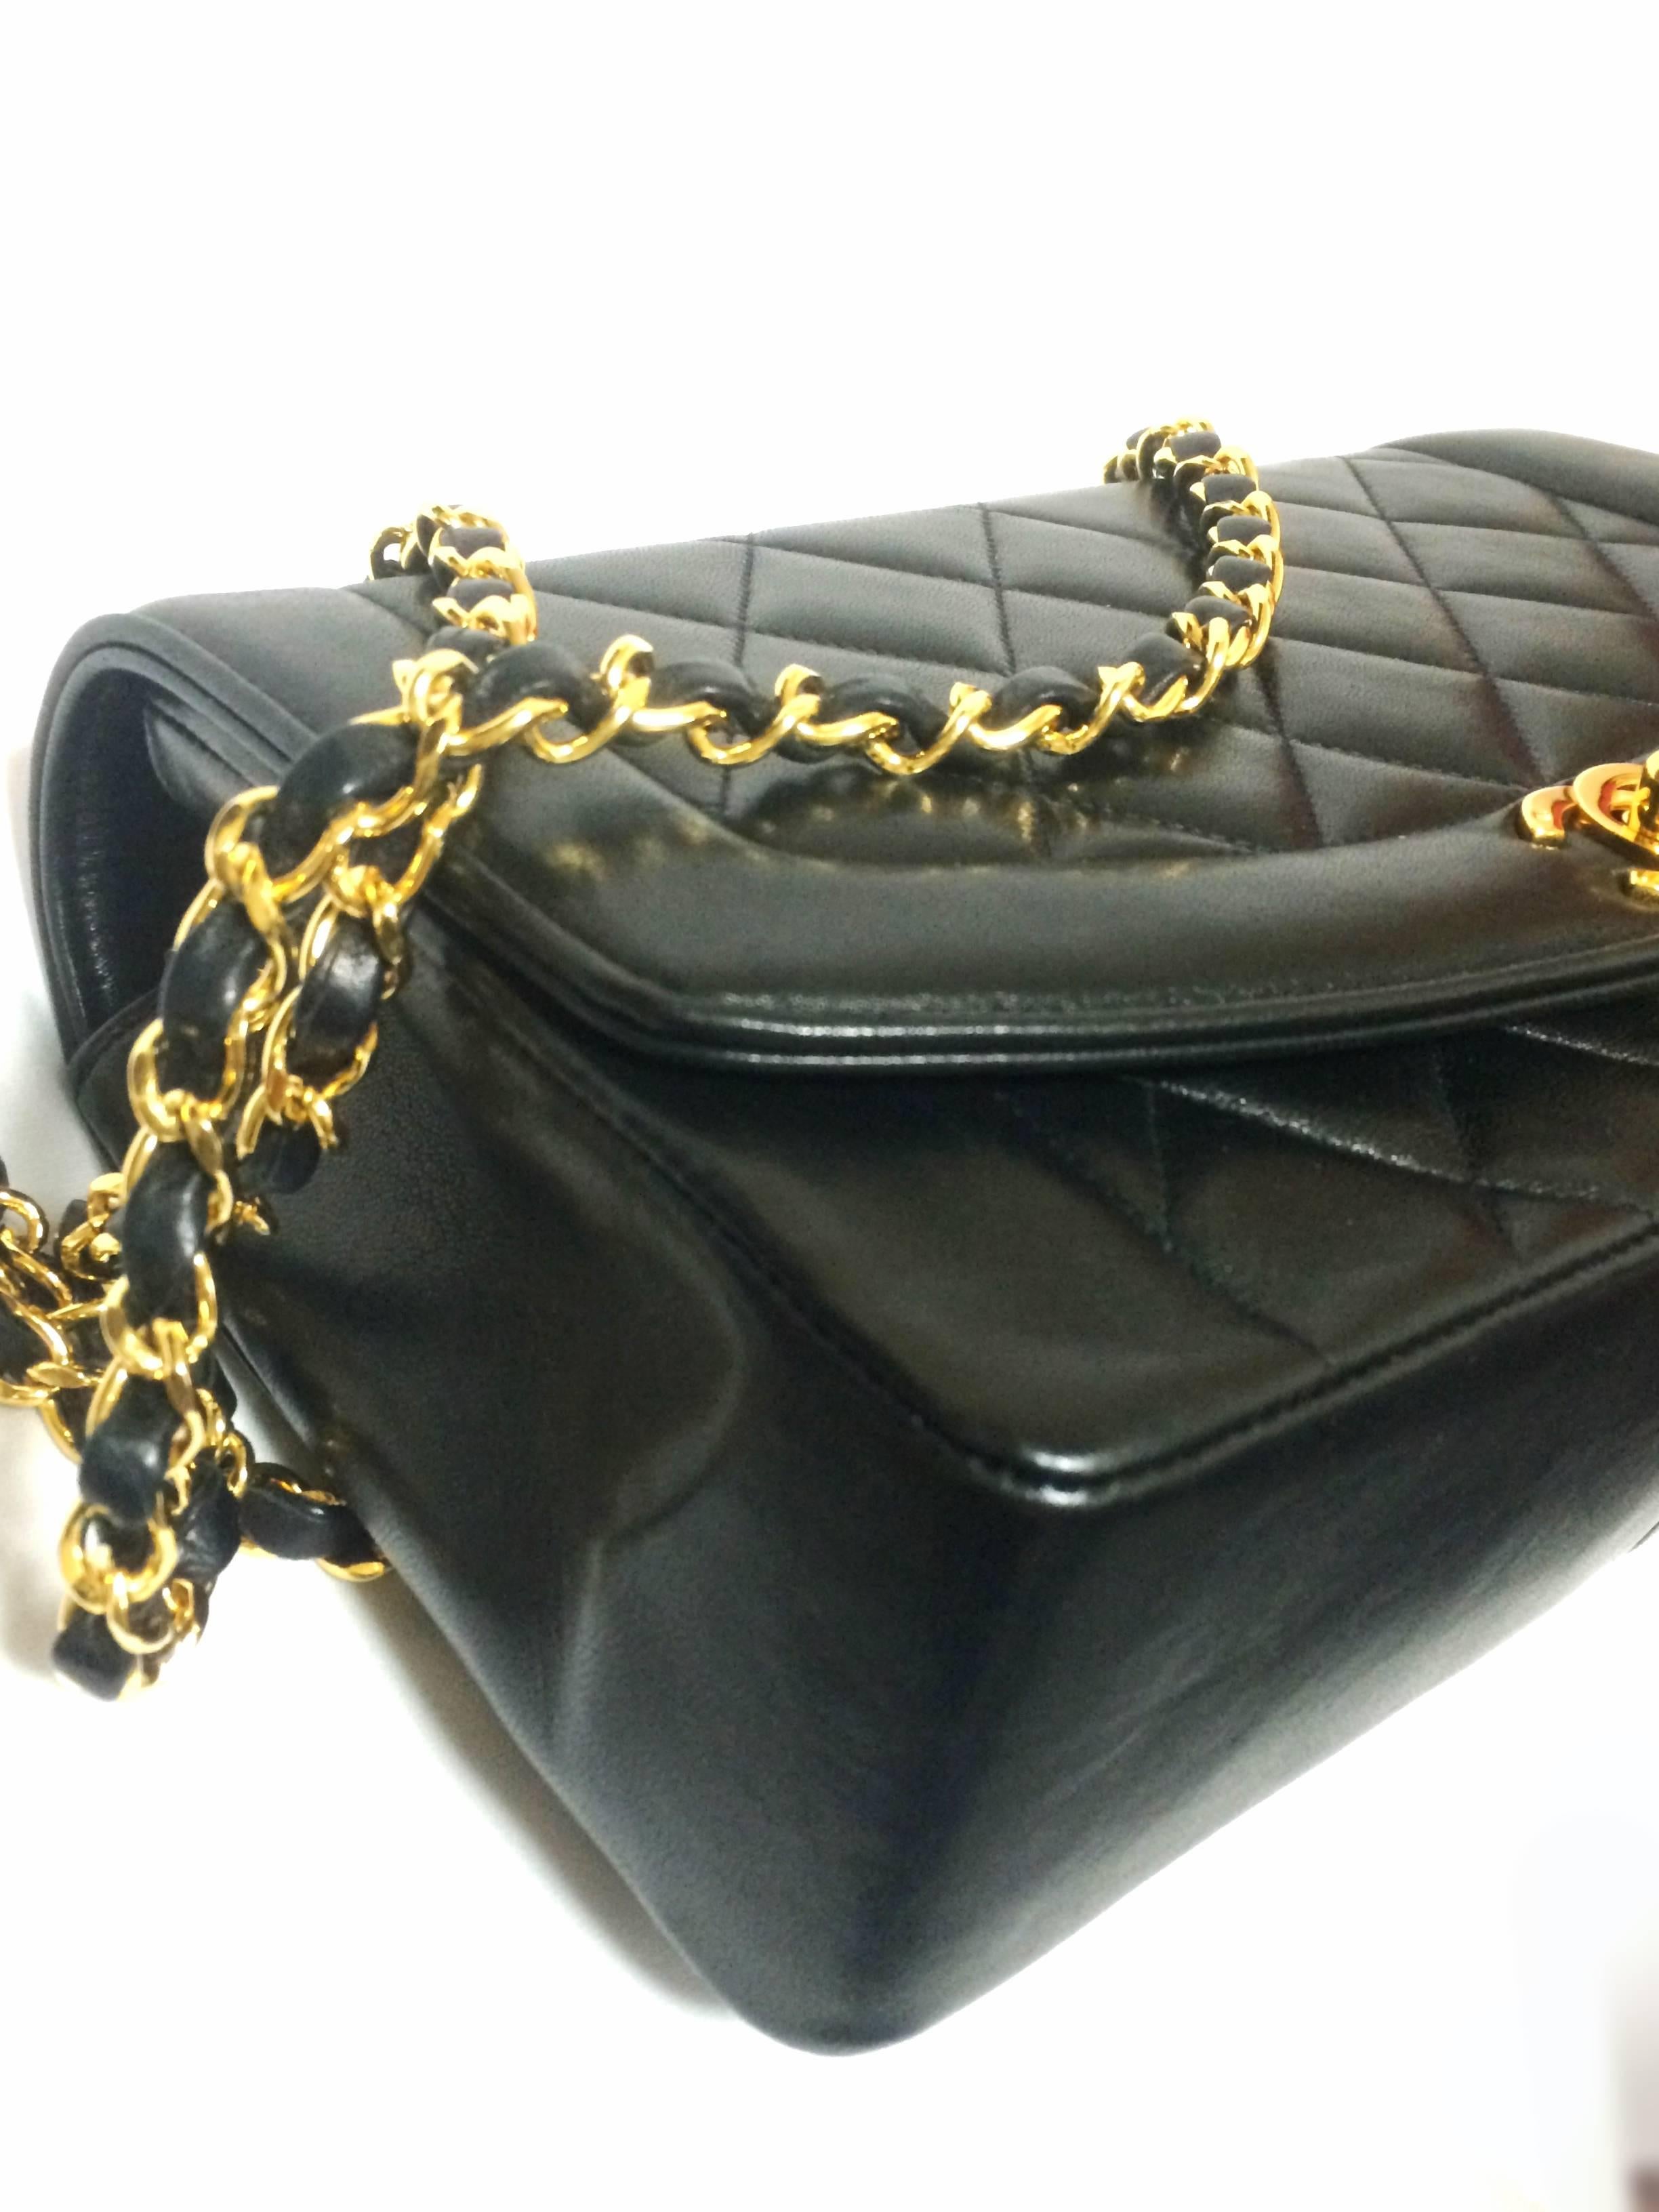 Women's MINT. Vintage CHANEL black lambskin classic flap 2.55 gold chain shoulder bag.